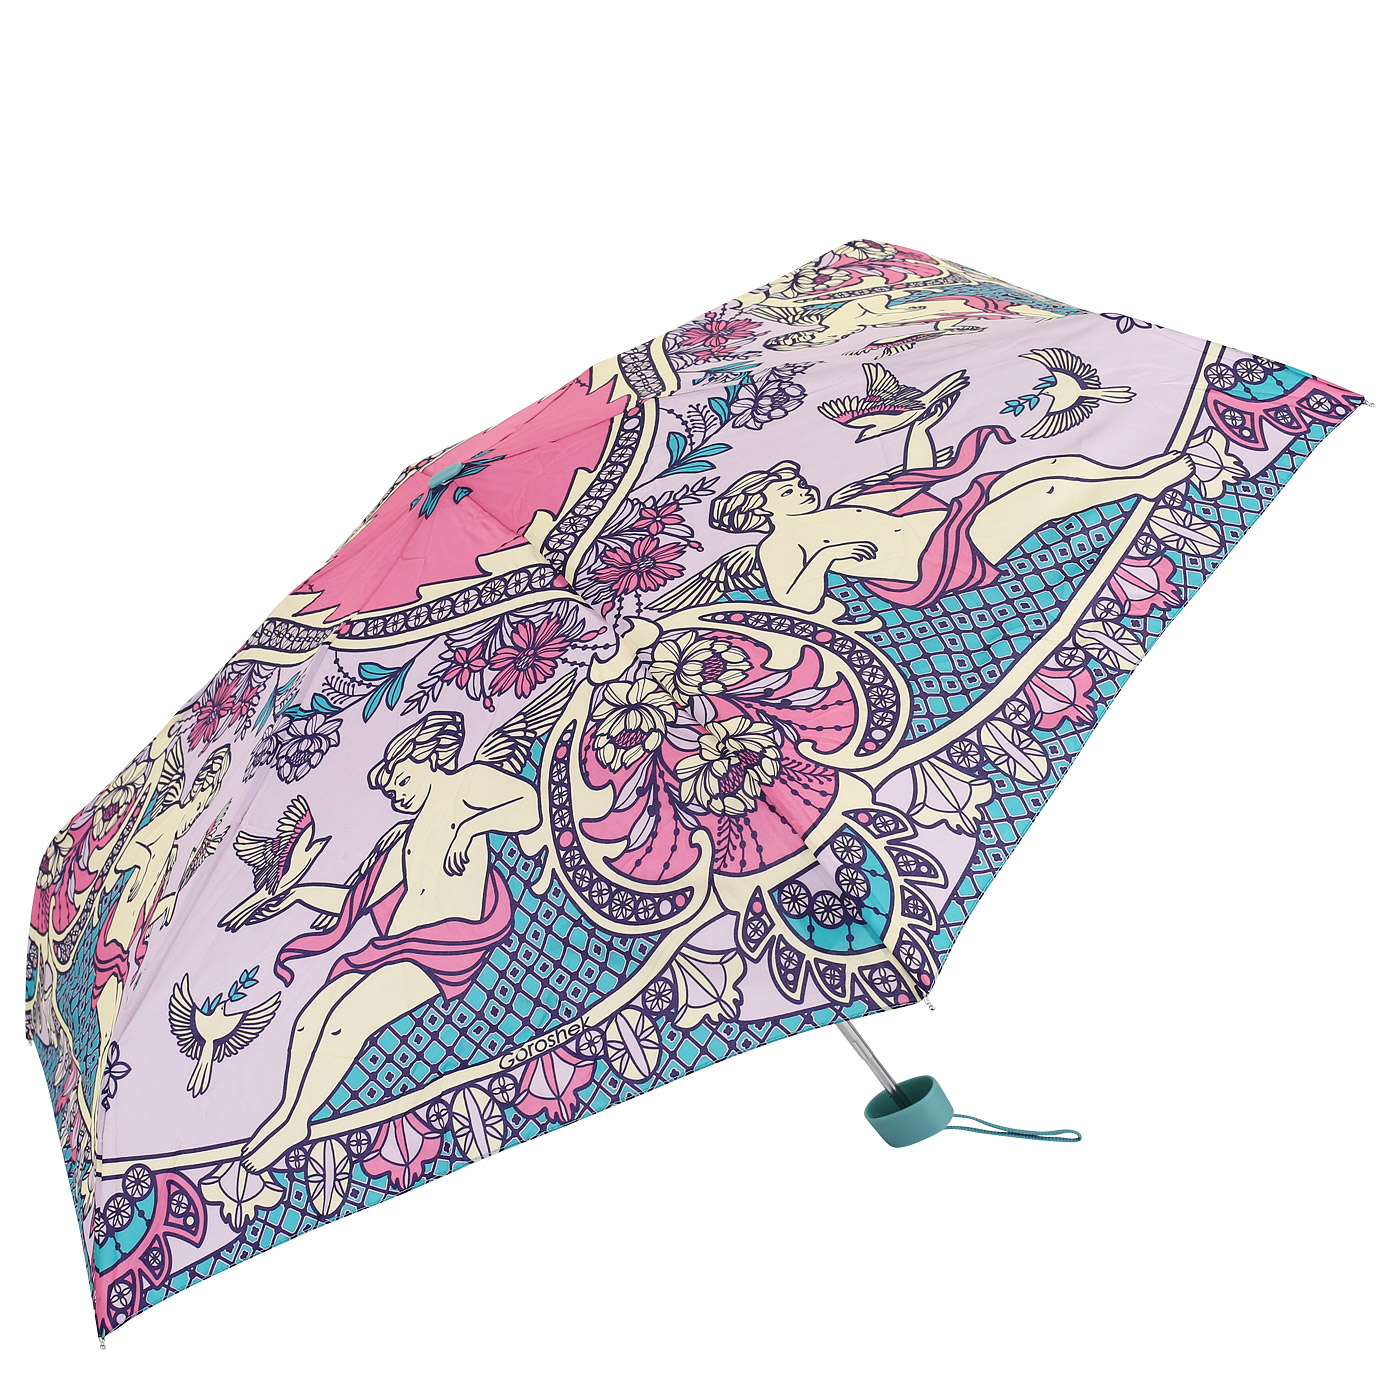 Goroshek Компактный зонт